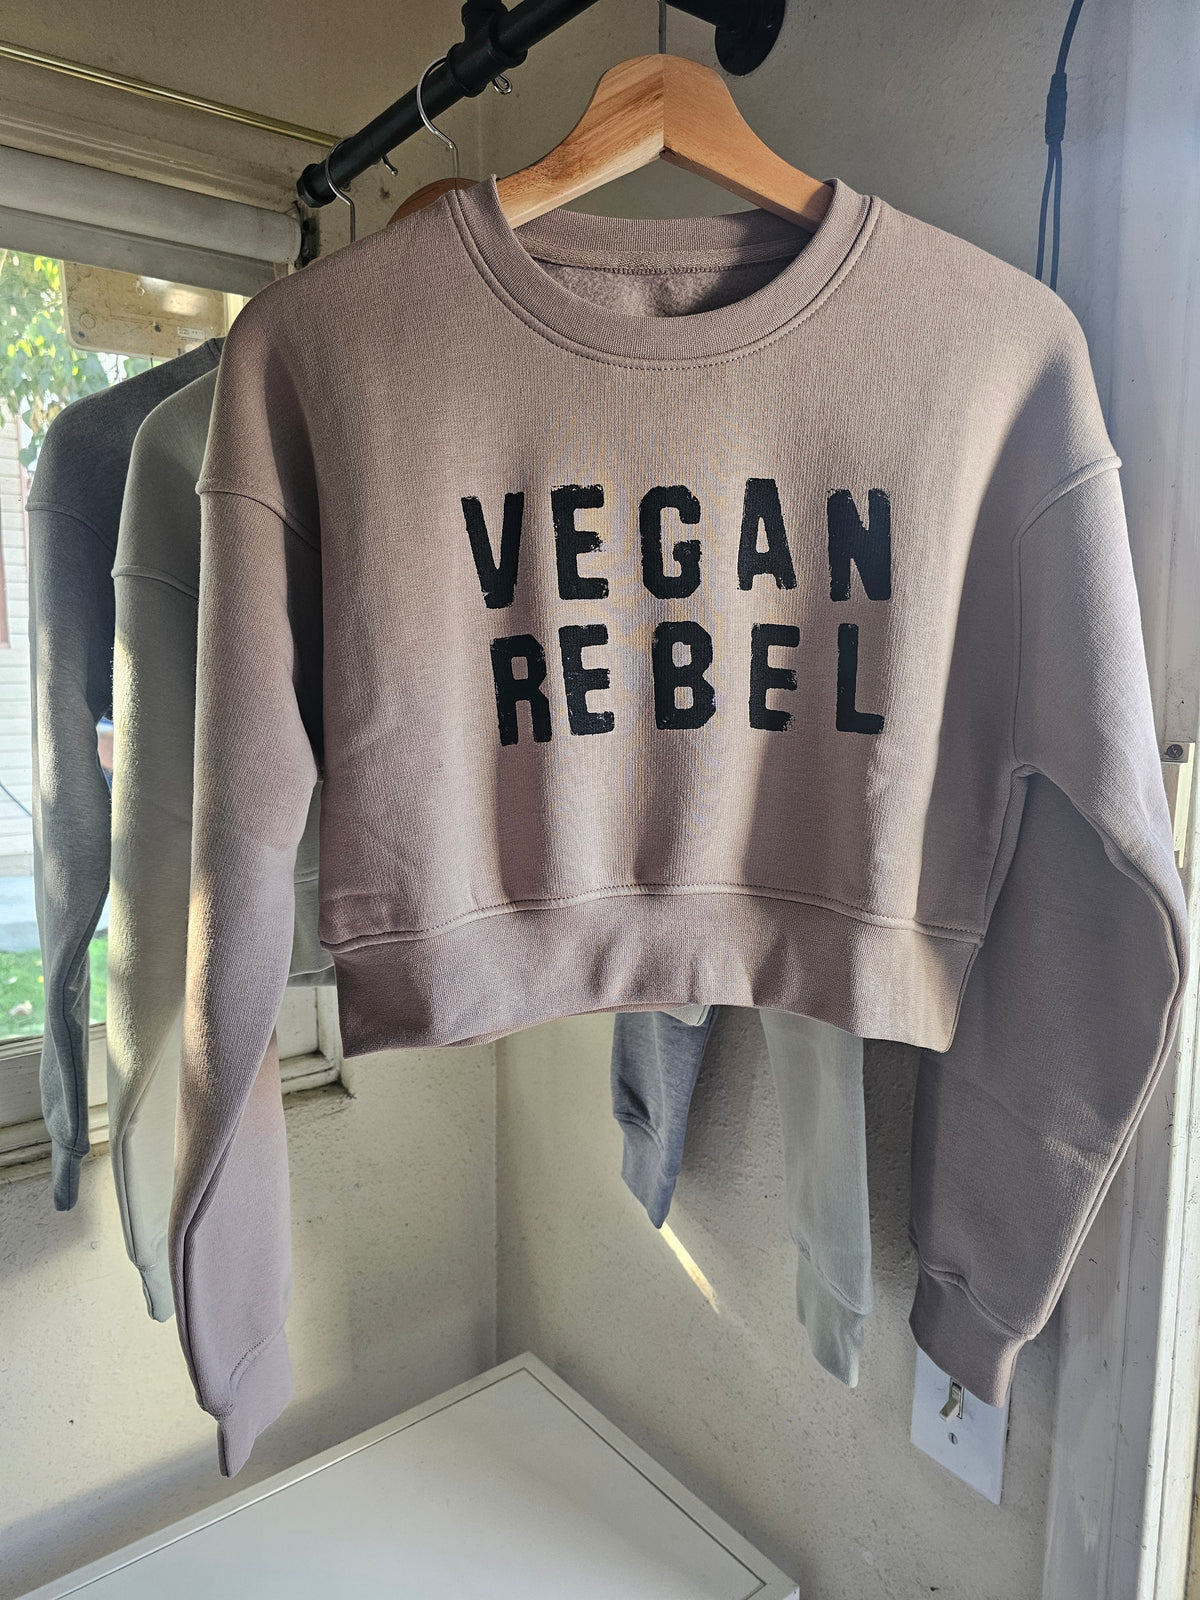 Cropped Fleece Sweatshirt Toast Vegan Club